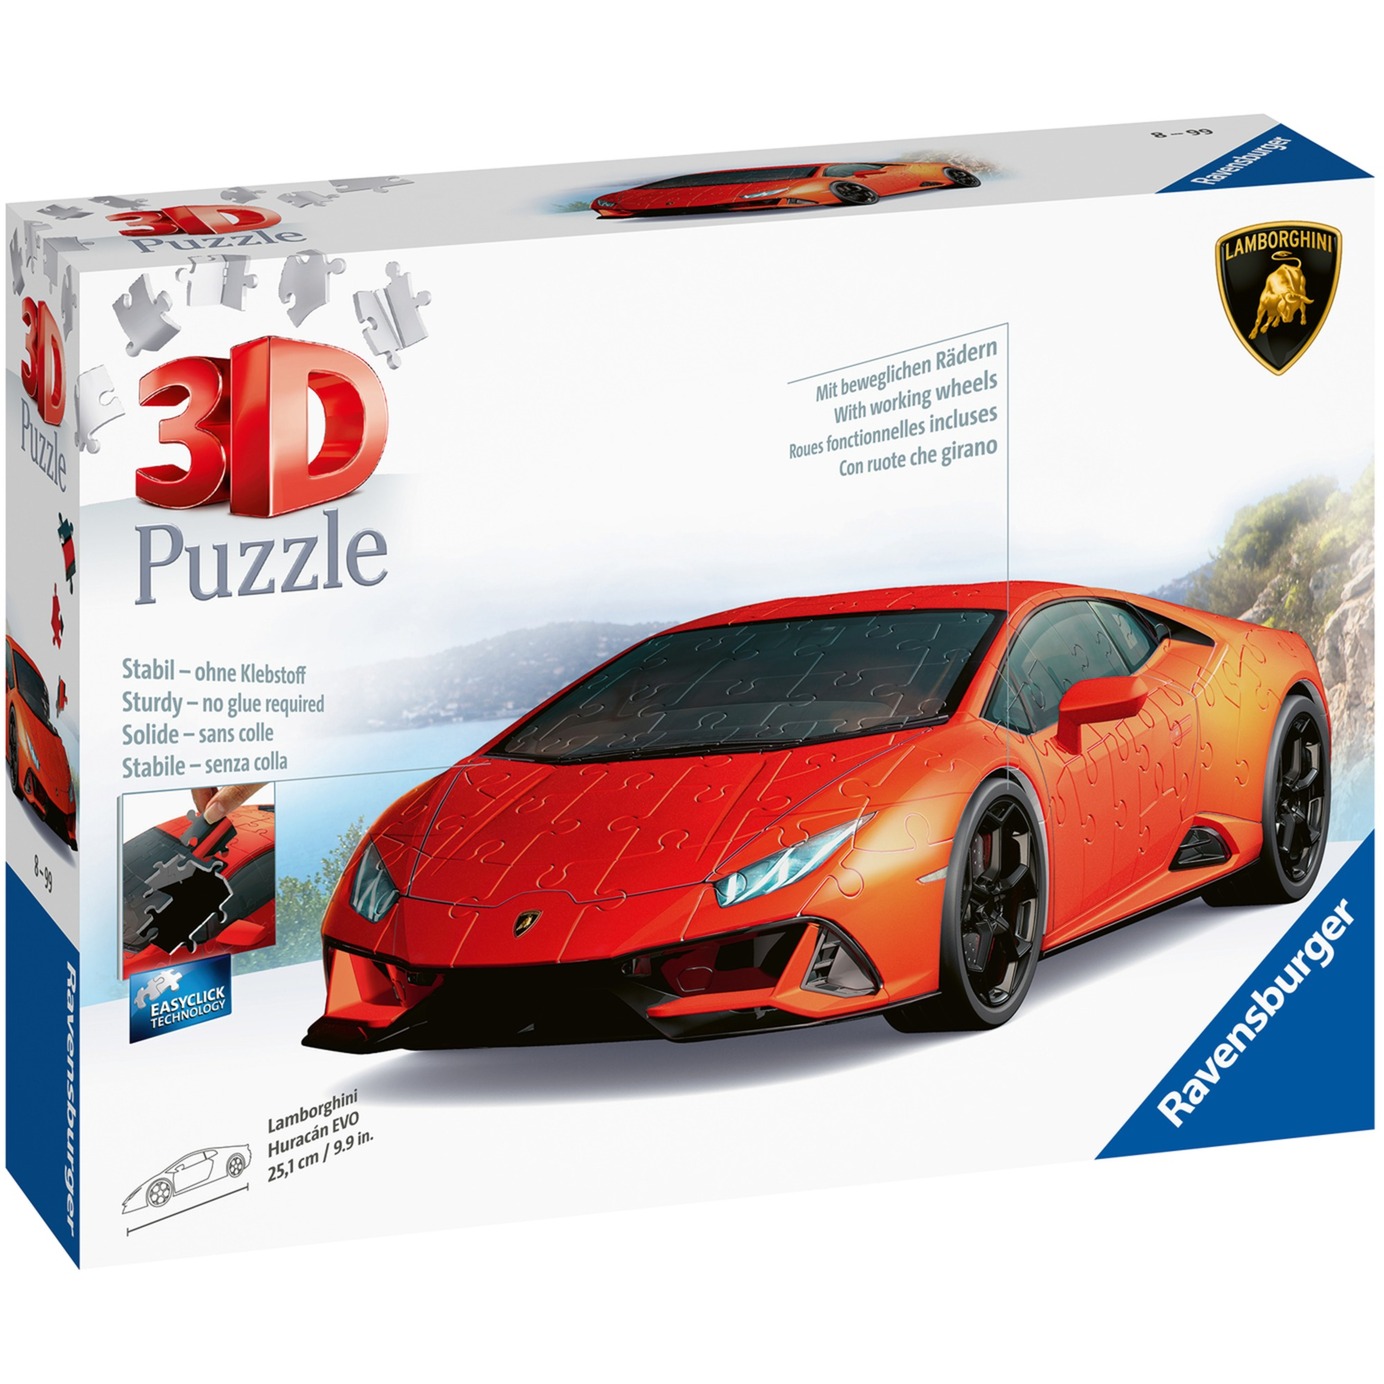 Image of Alternate - 3D Puzzle Lamborghini Huracán EVO online einkaufen bei Alternate